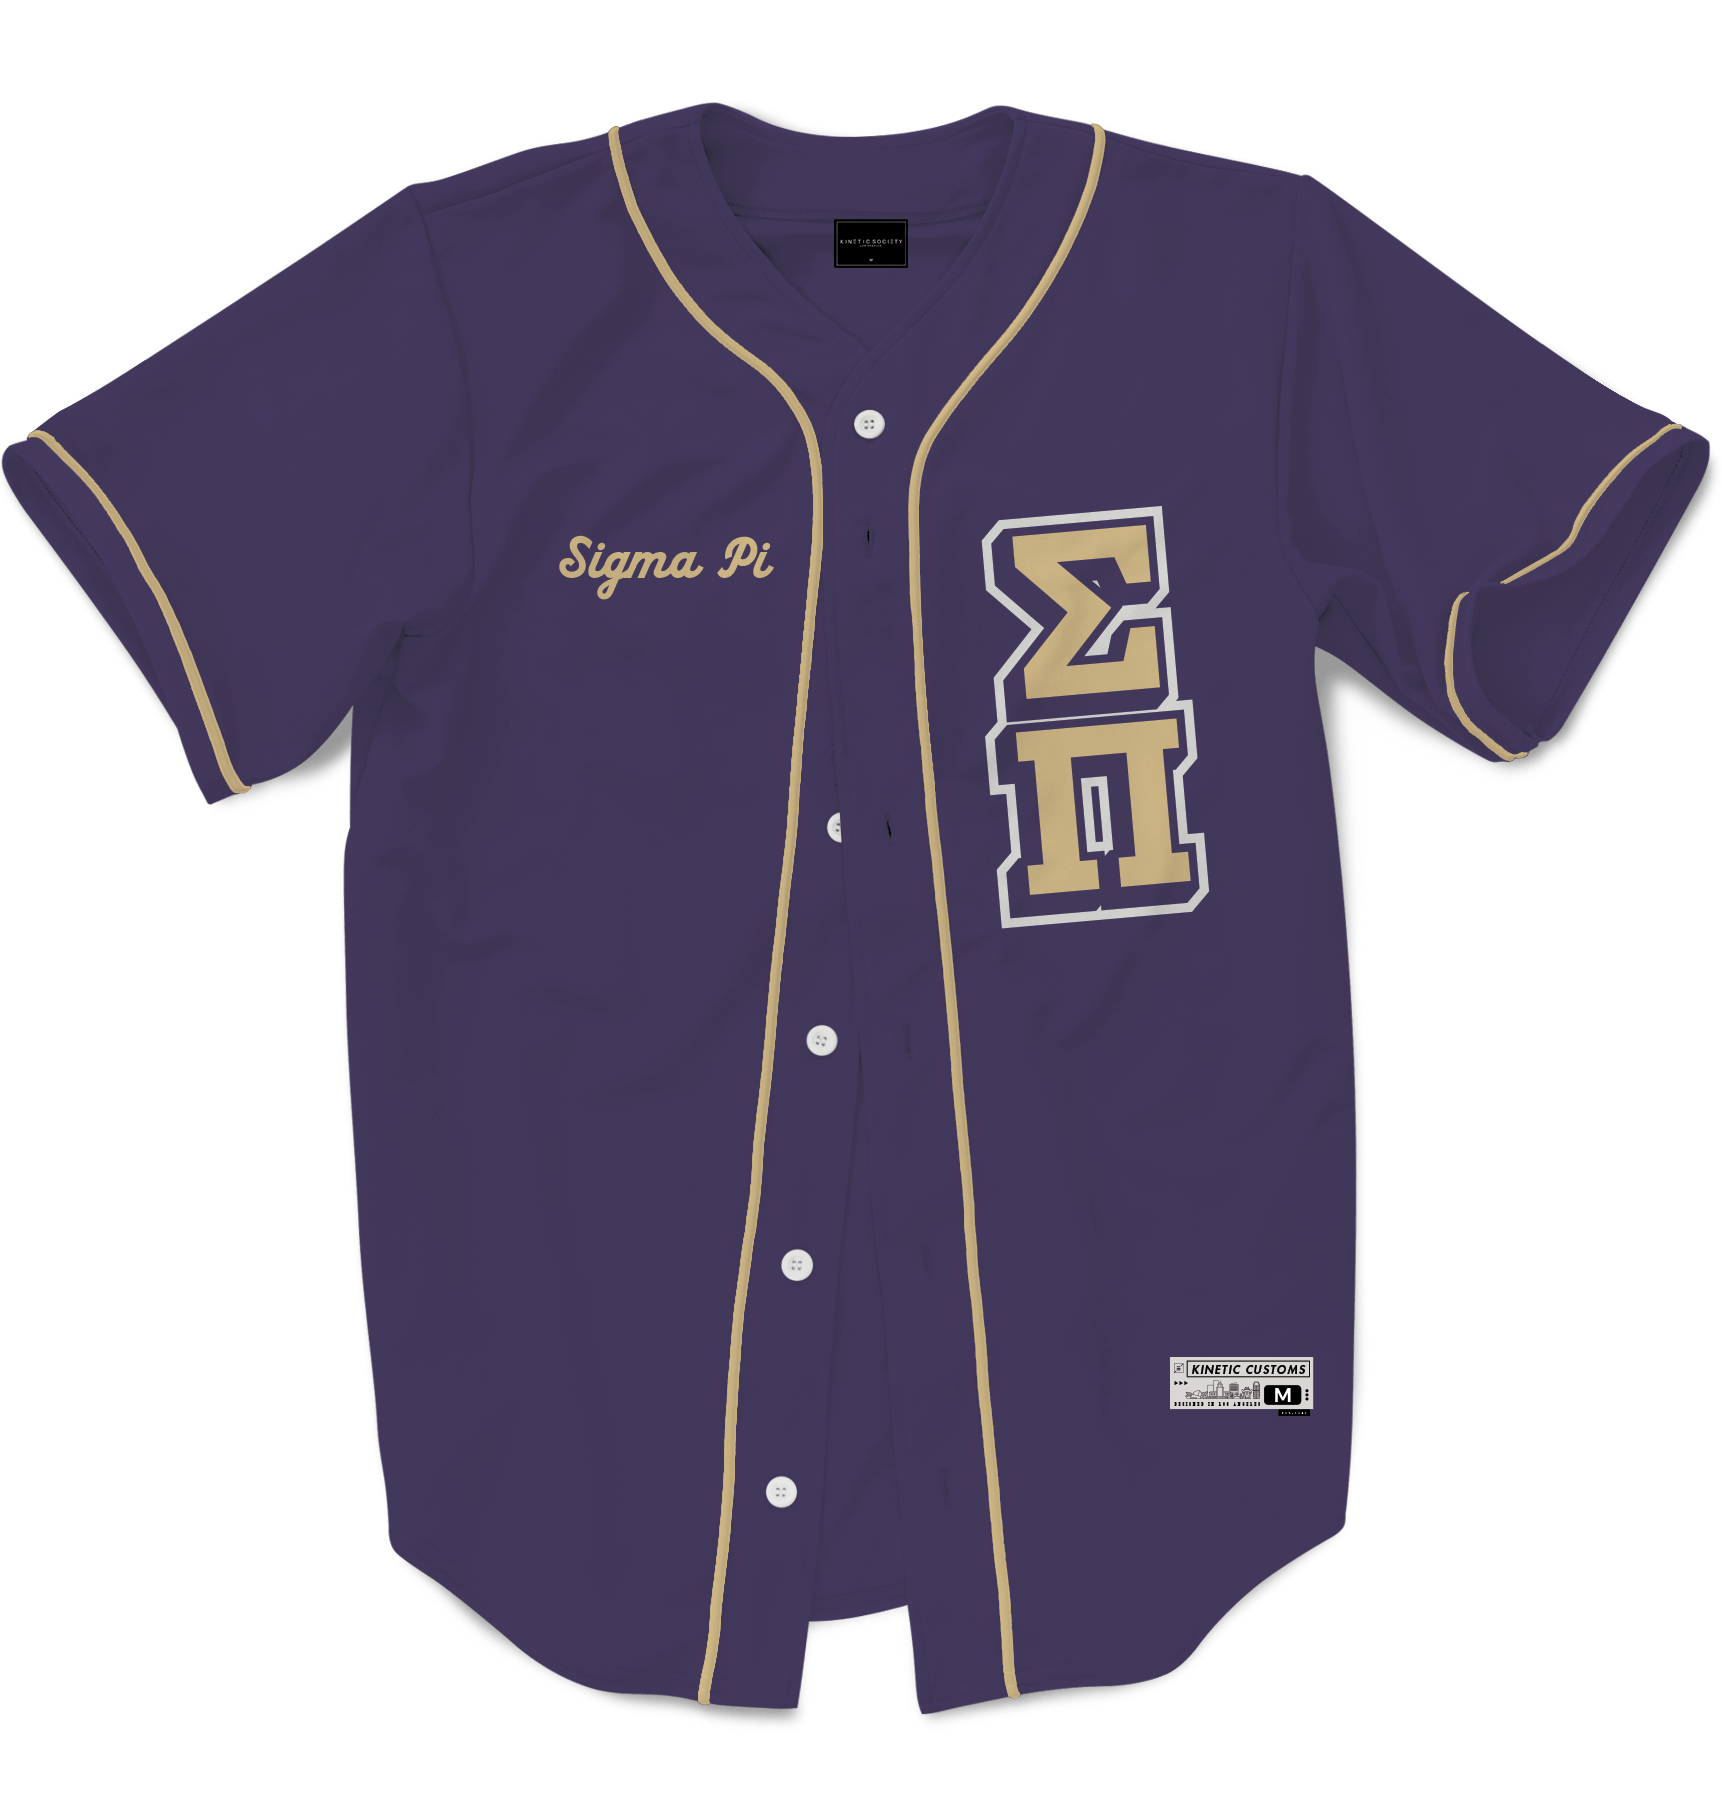 Sigma Pi - The Block Baseball Jersey